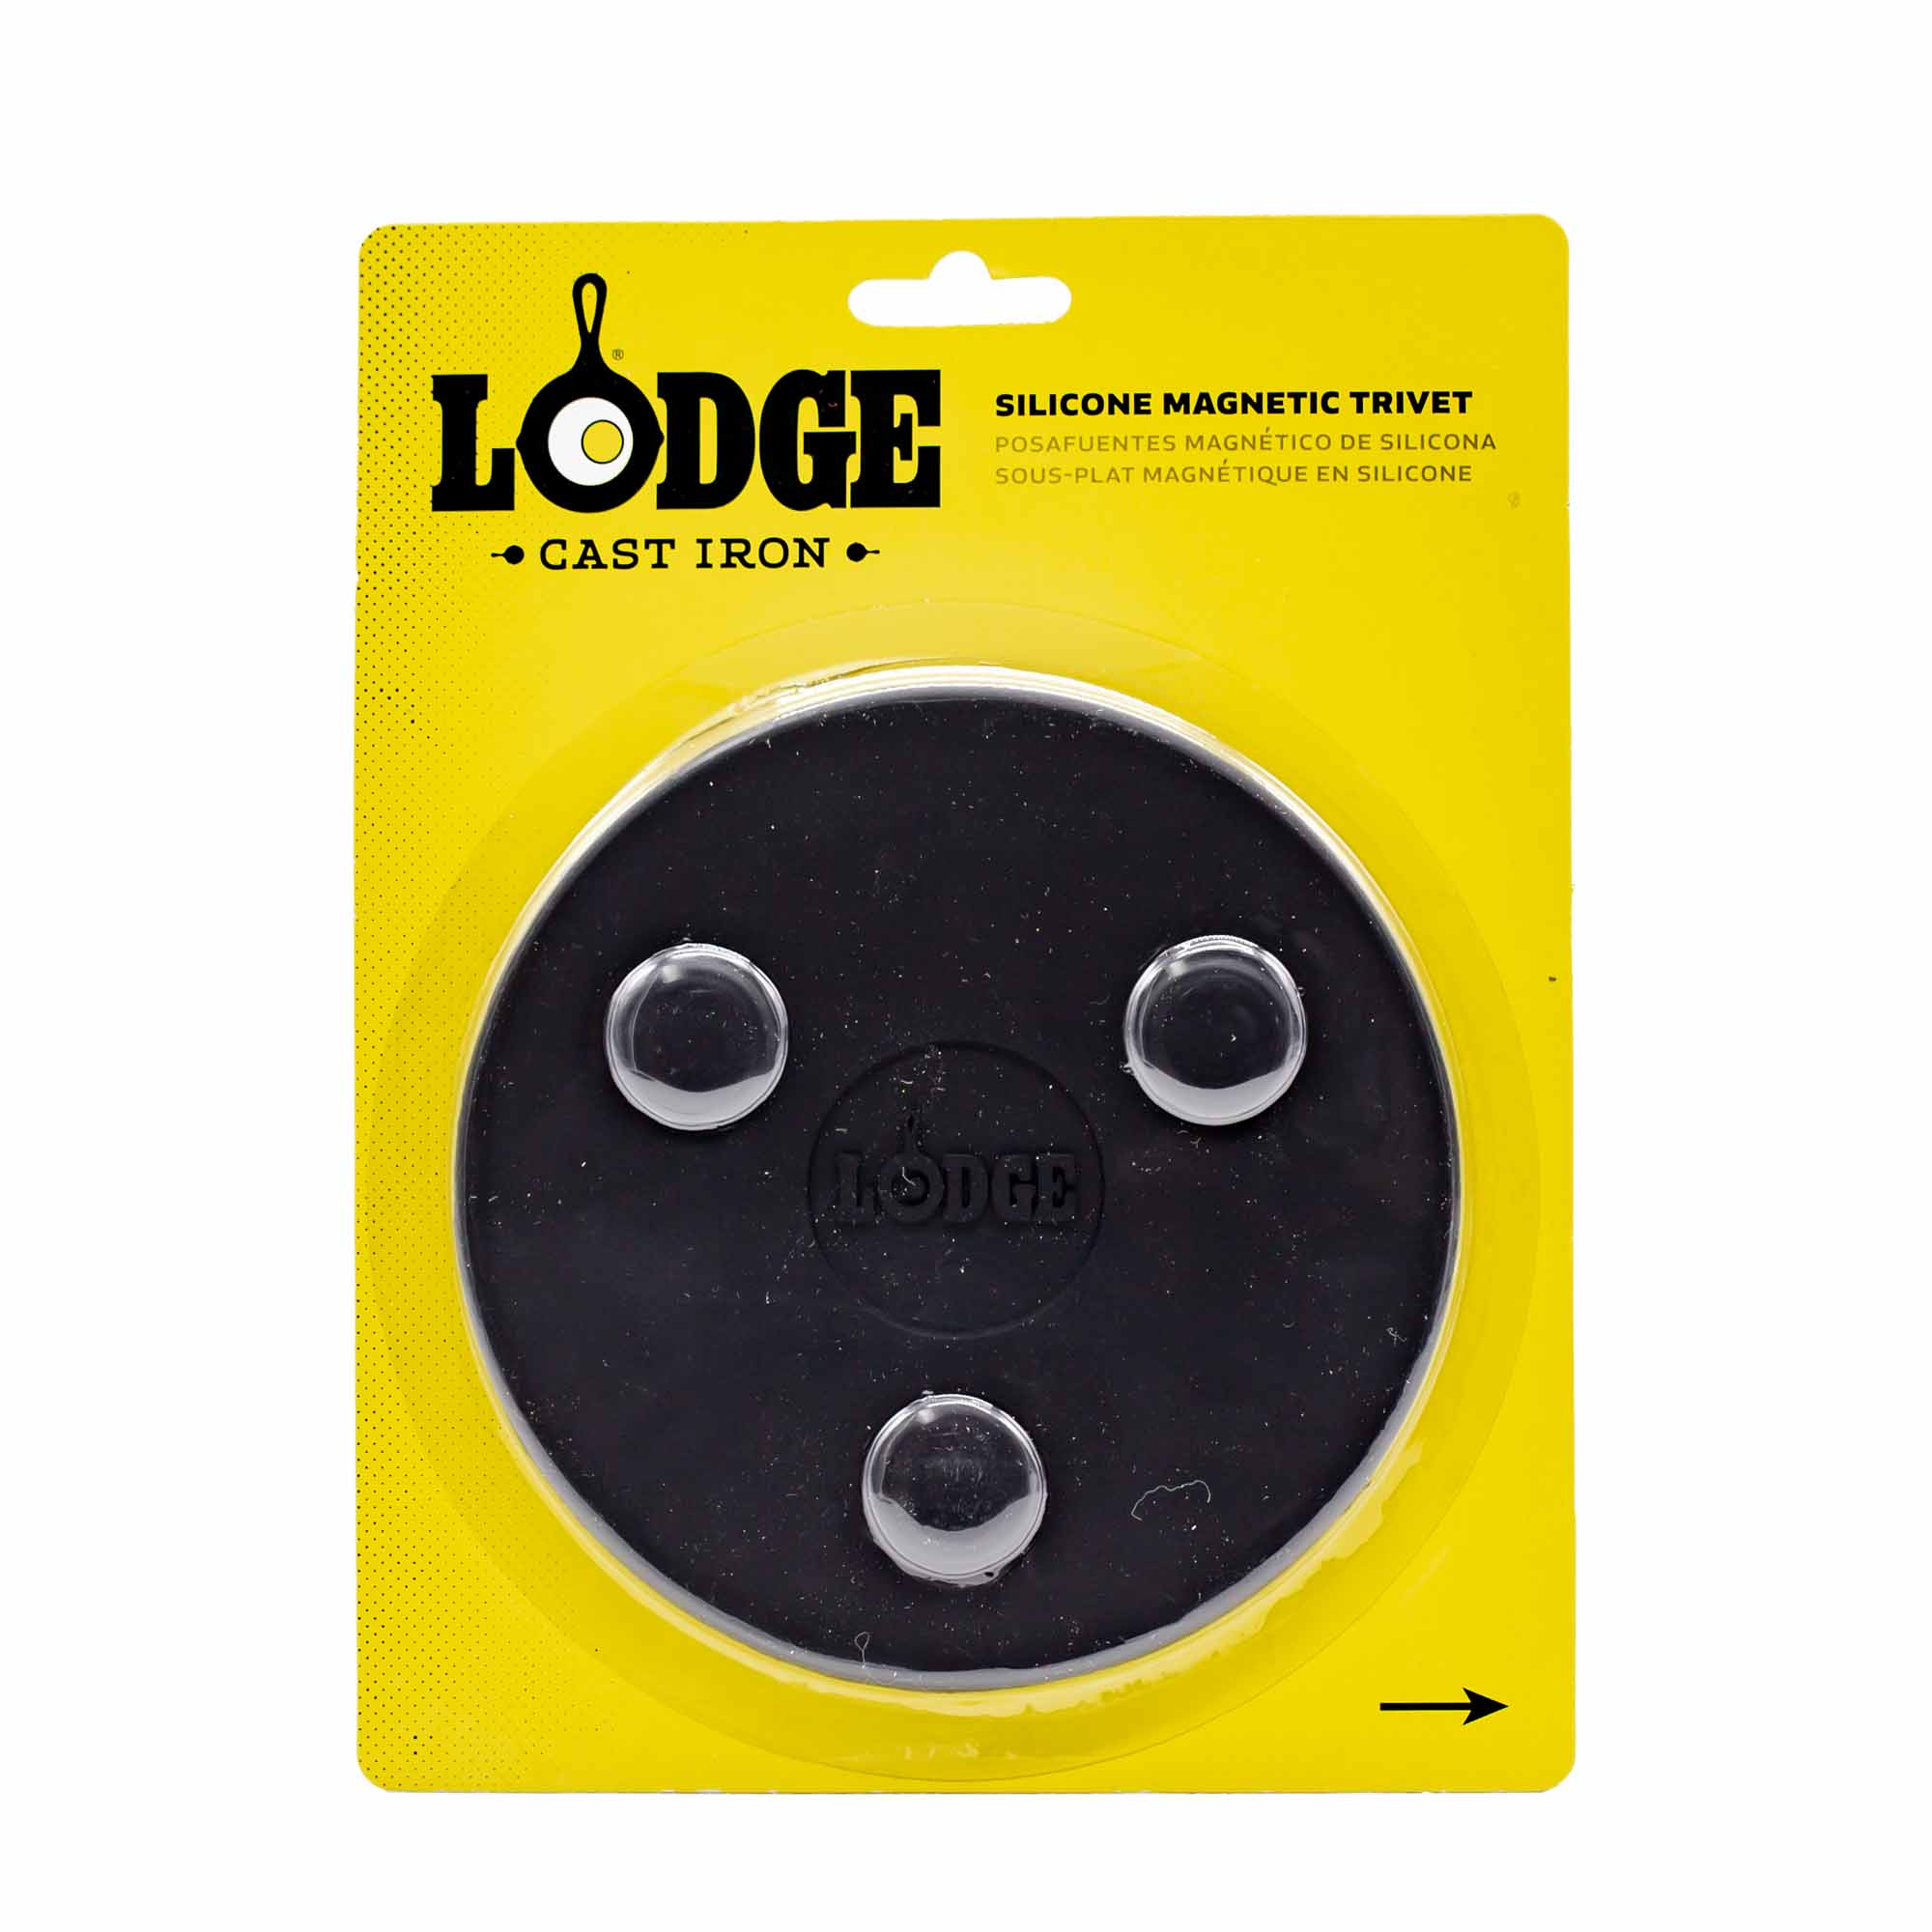 Magnetic Trivet  Lodge Cast Iron